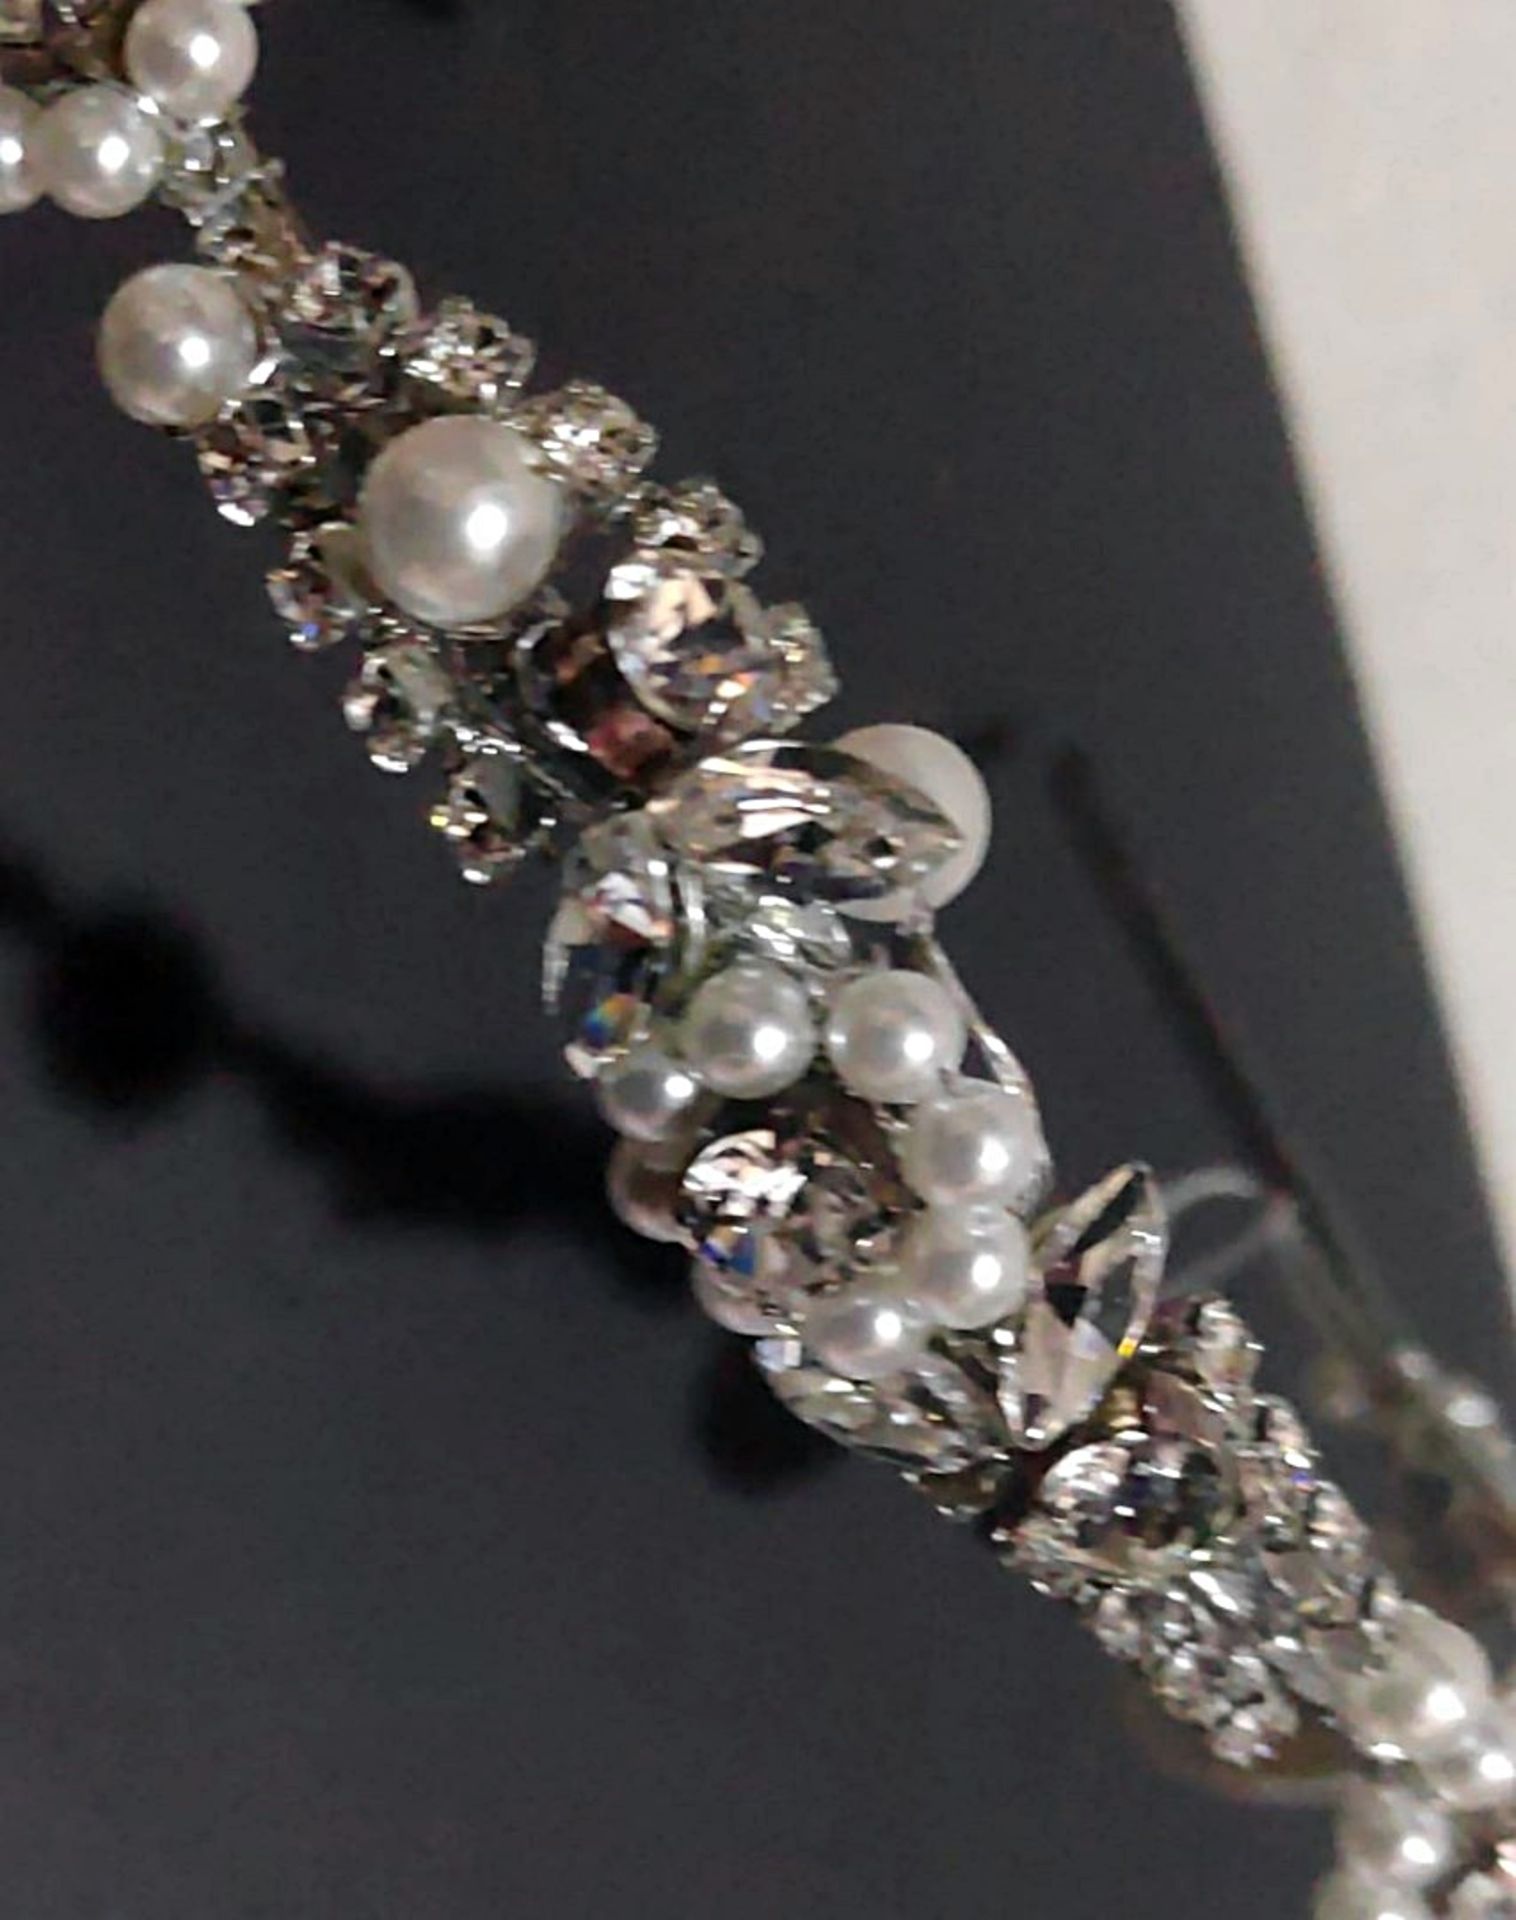 1 x Liza Vintage Art-Deco Inspired Pearl And Crystal Bridal Headband Tiara With Swarovski Elements - Image 4 of 6